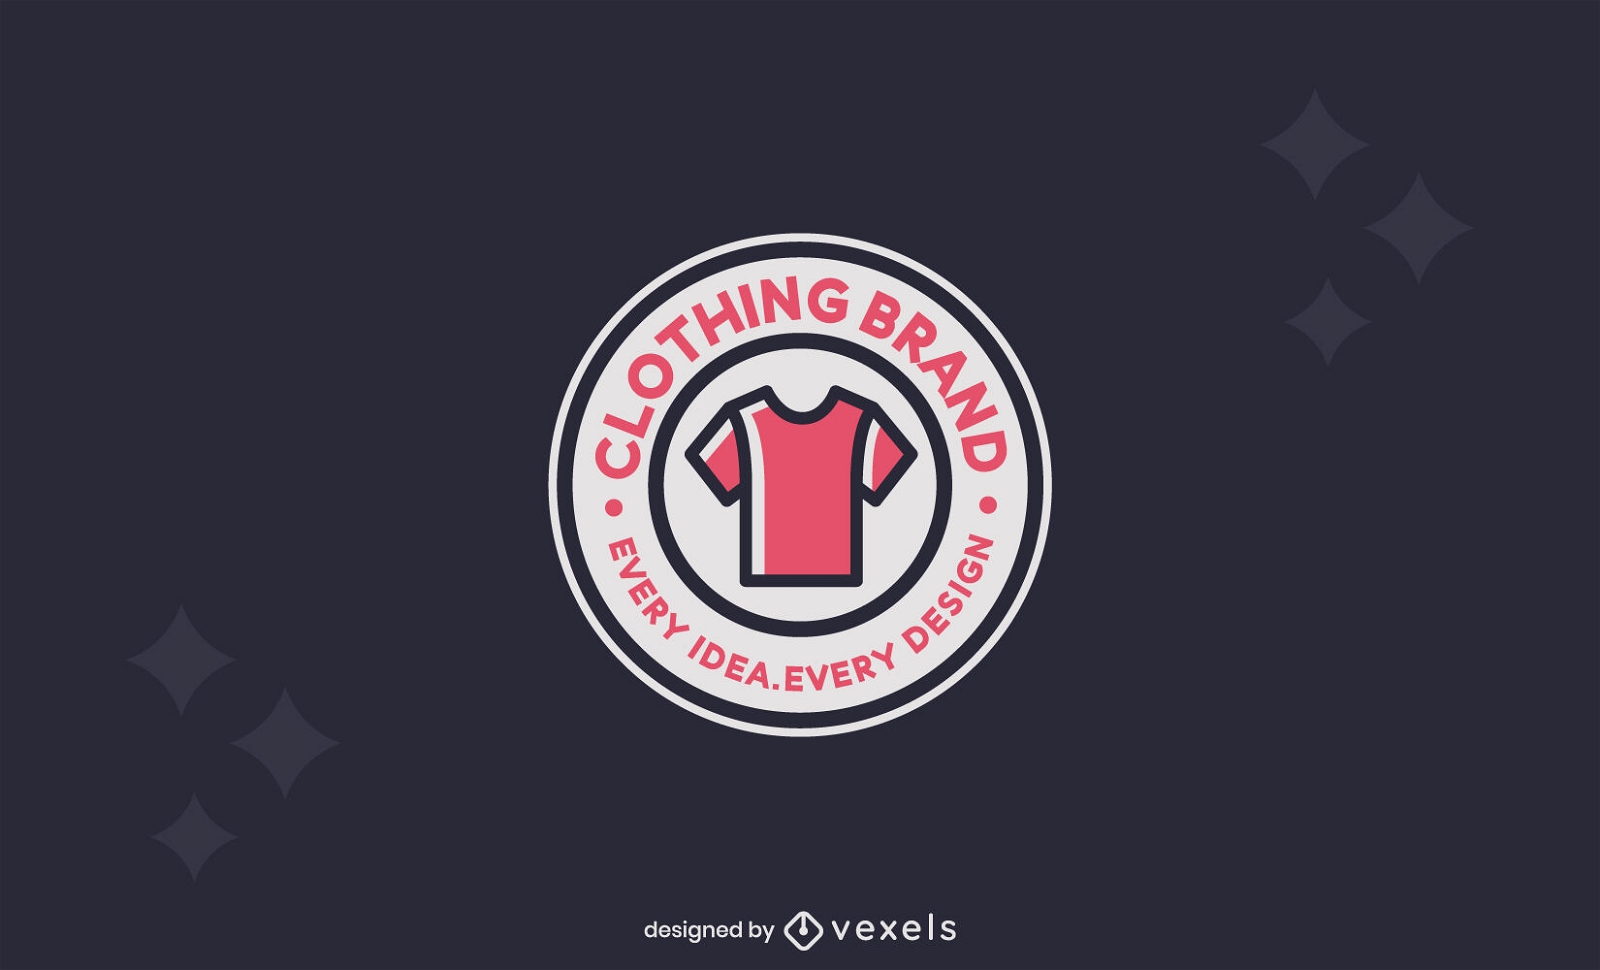 Shirt clothing business logo design